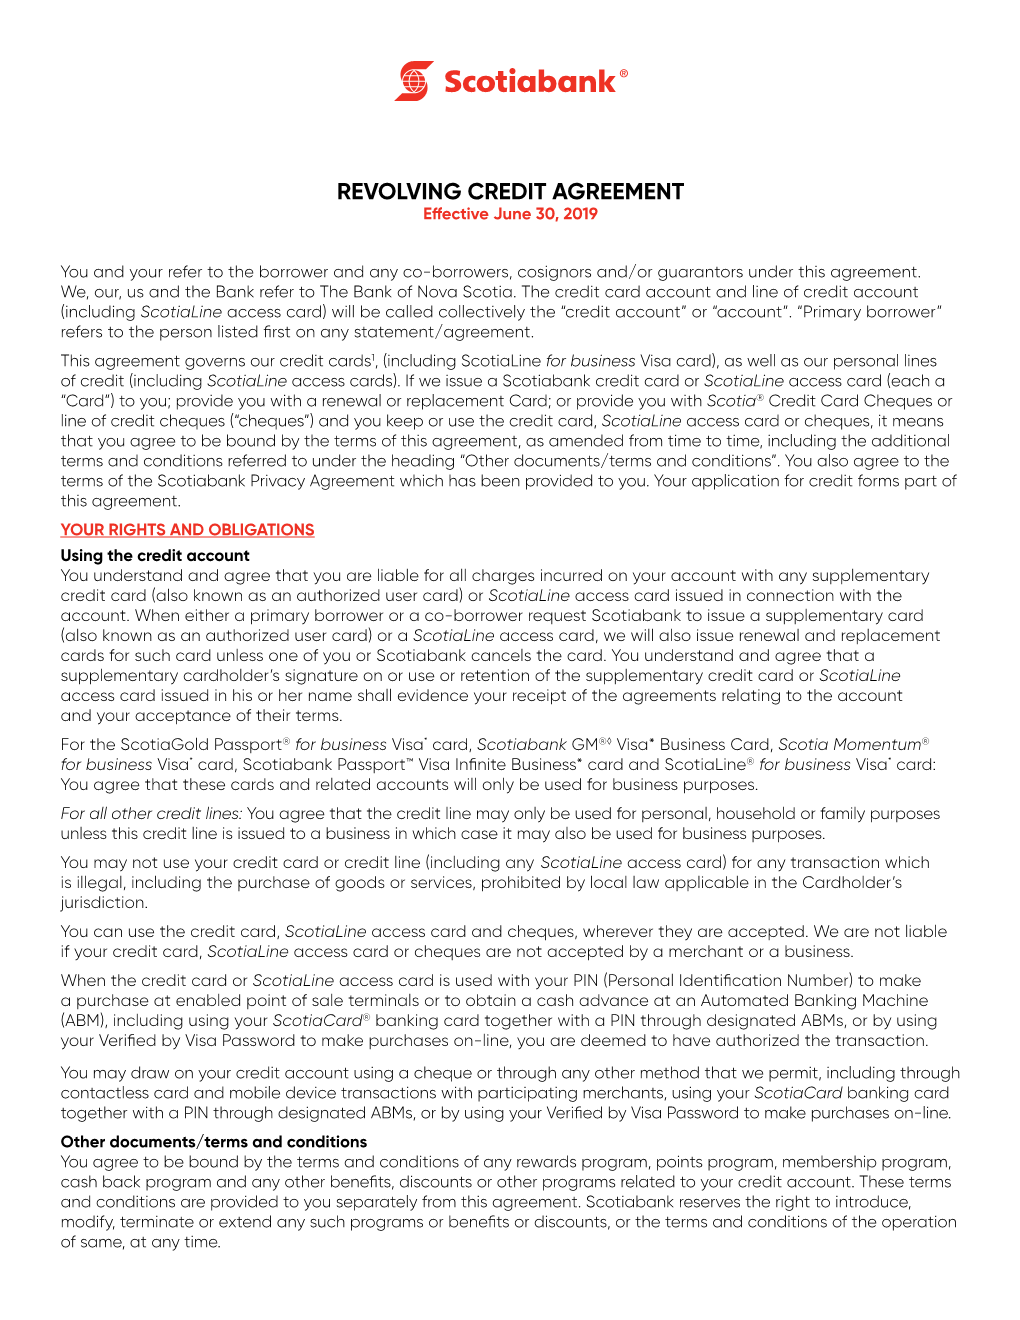 REVOLVING CREDIT AGREEMENT Effective June 30, 2019